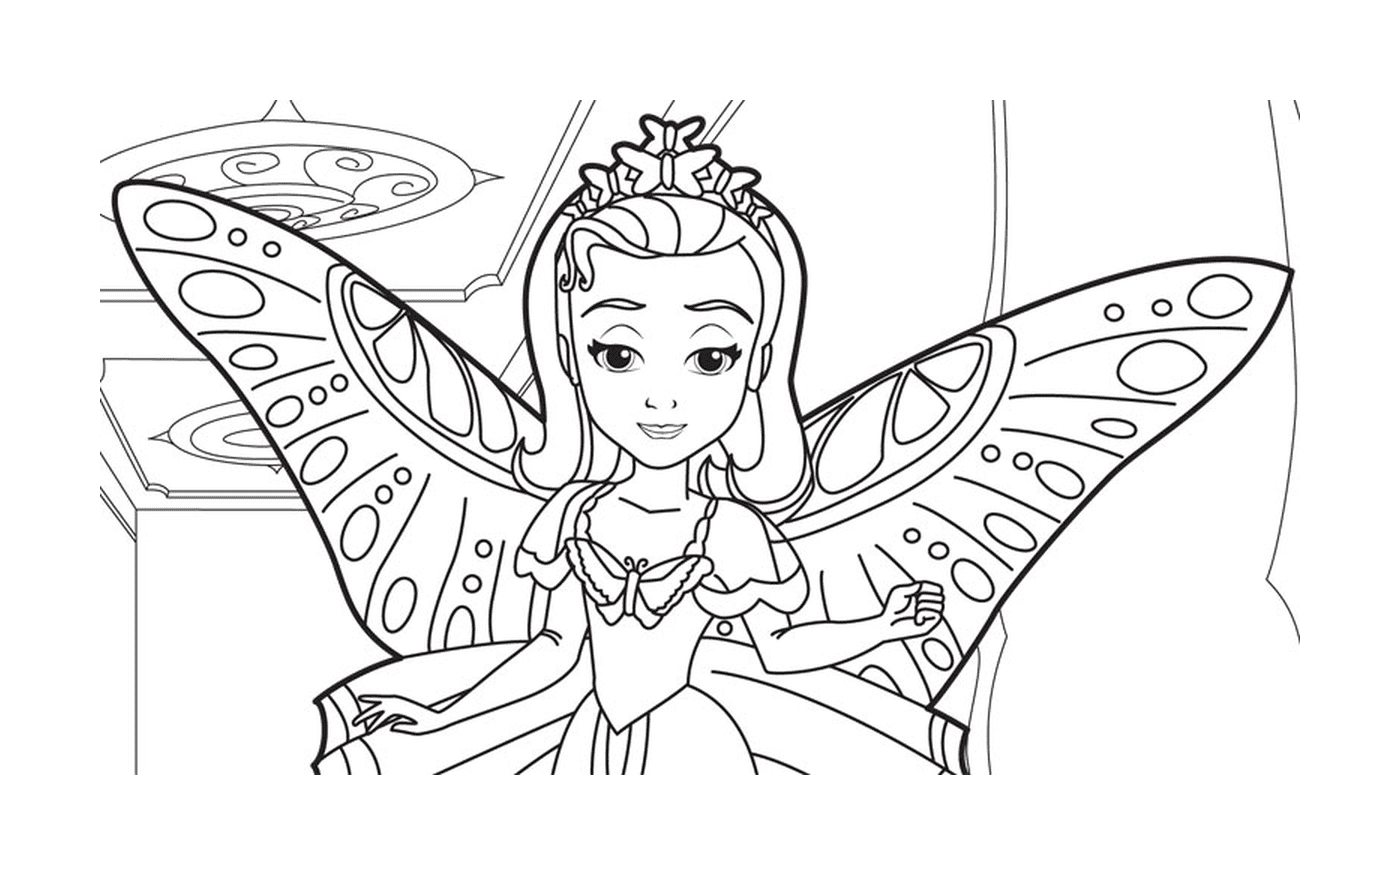  Princesa Disney con alas coloridas 